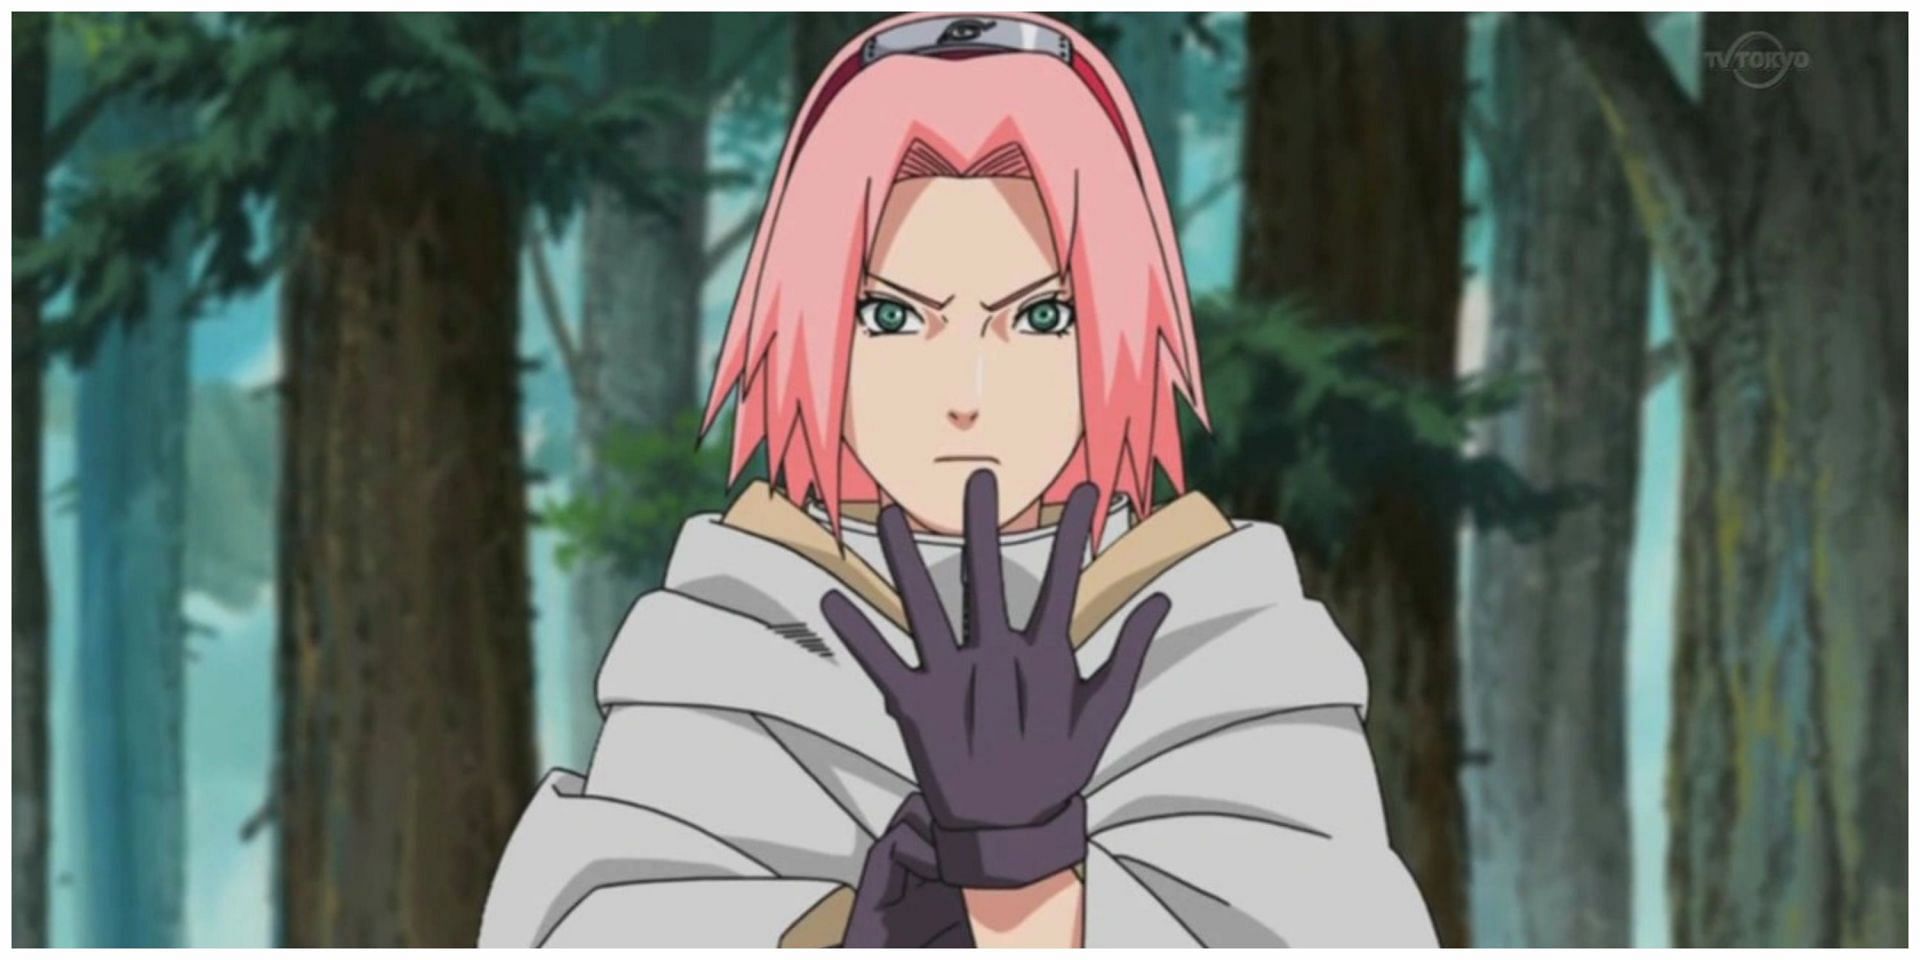 Sakura is a medical ninja trained under Tsunade (Image via Studio Pierrot)